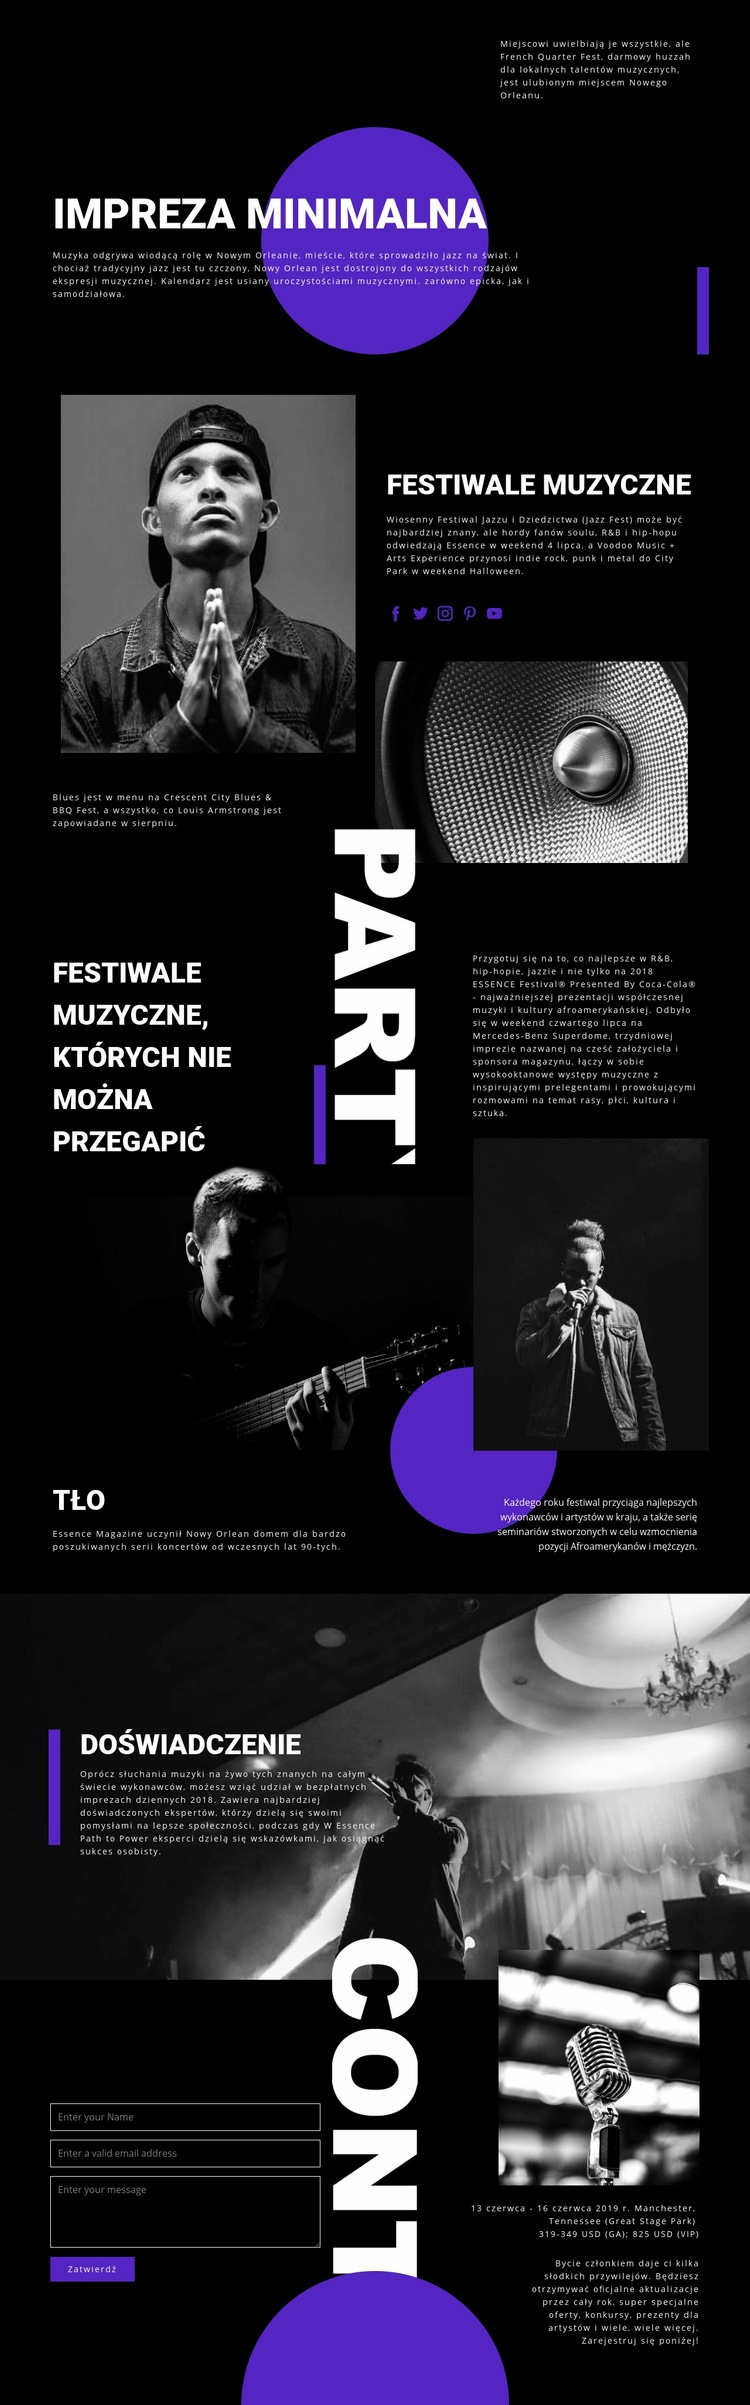 Festiwal Muzyczny Szablon HTML5